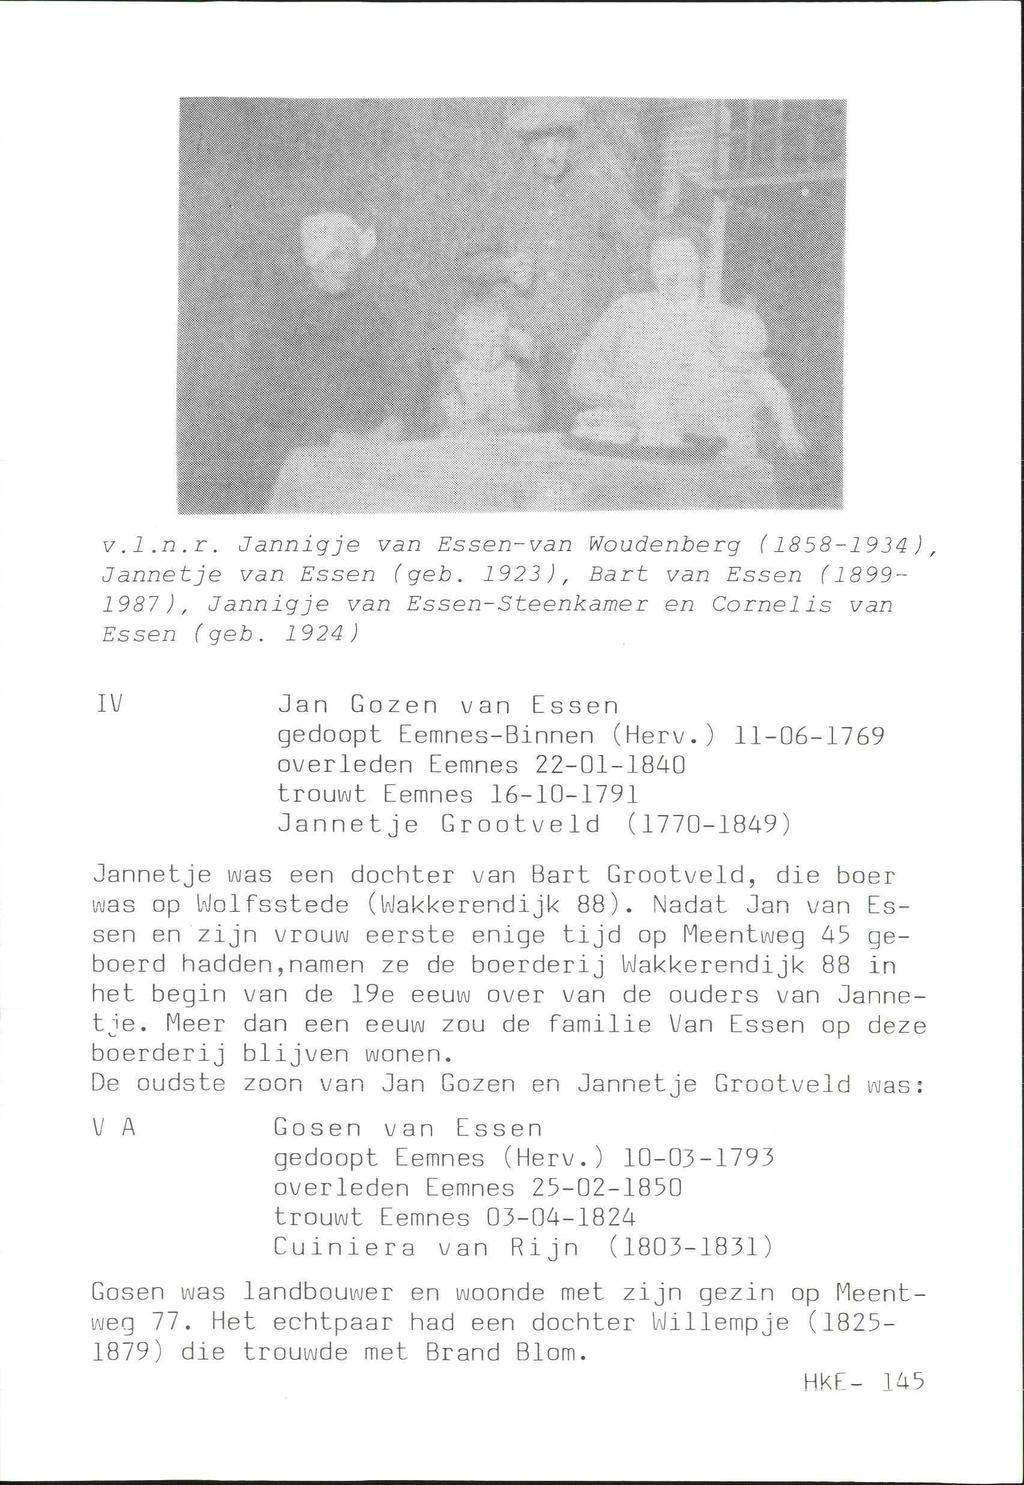 V - :, '.;. v.1.n.r. Jannigje van Essen-van Woudenberg (1858-1934 ) Jannetje van Essen (geb. 1923), Bart van Essen (1899-1987), Jannigje van Essen-Steenkamer en Cornel is van Essen (geb.